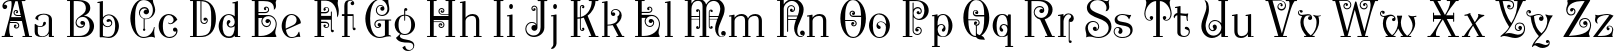 Пример написания английского алфавита шрифтом P22 Kilkenny Pro